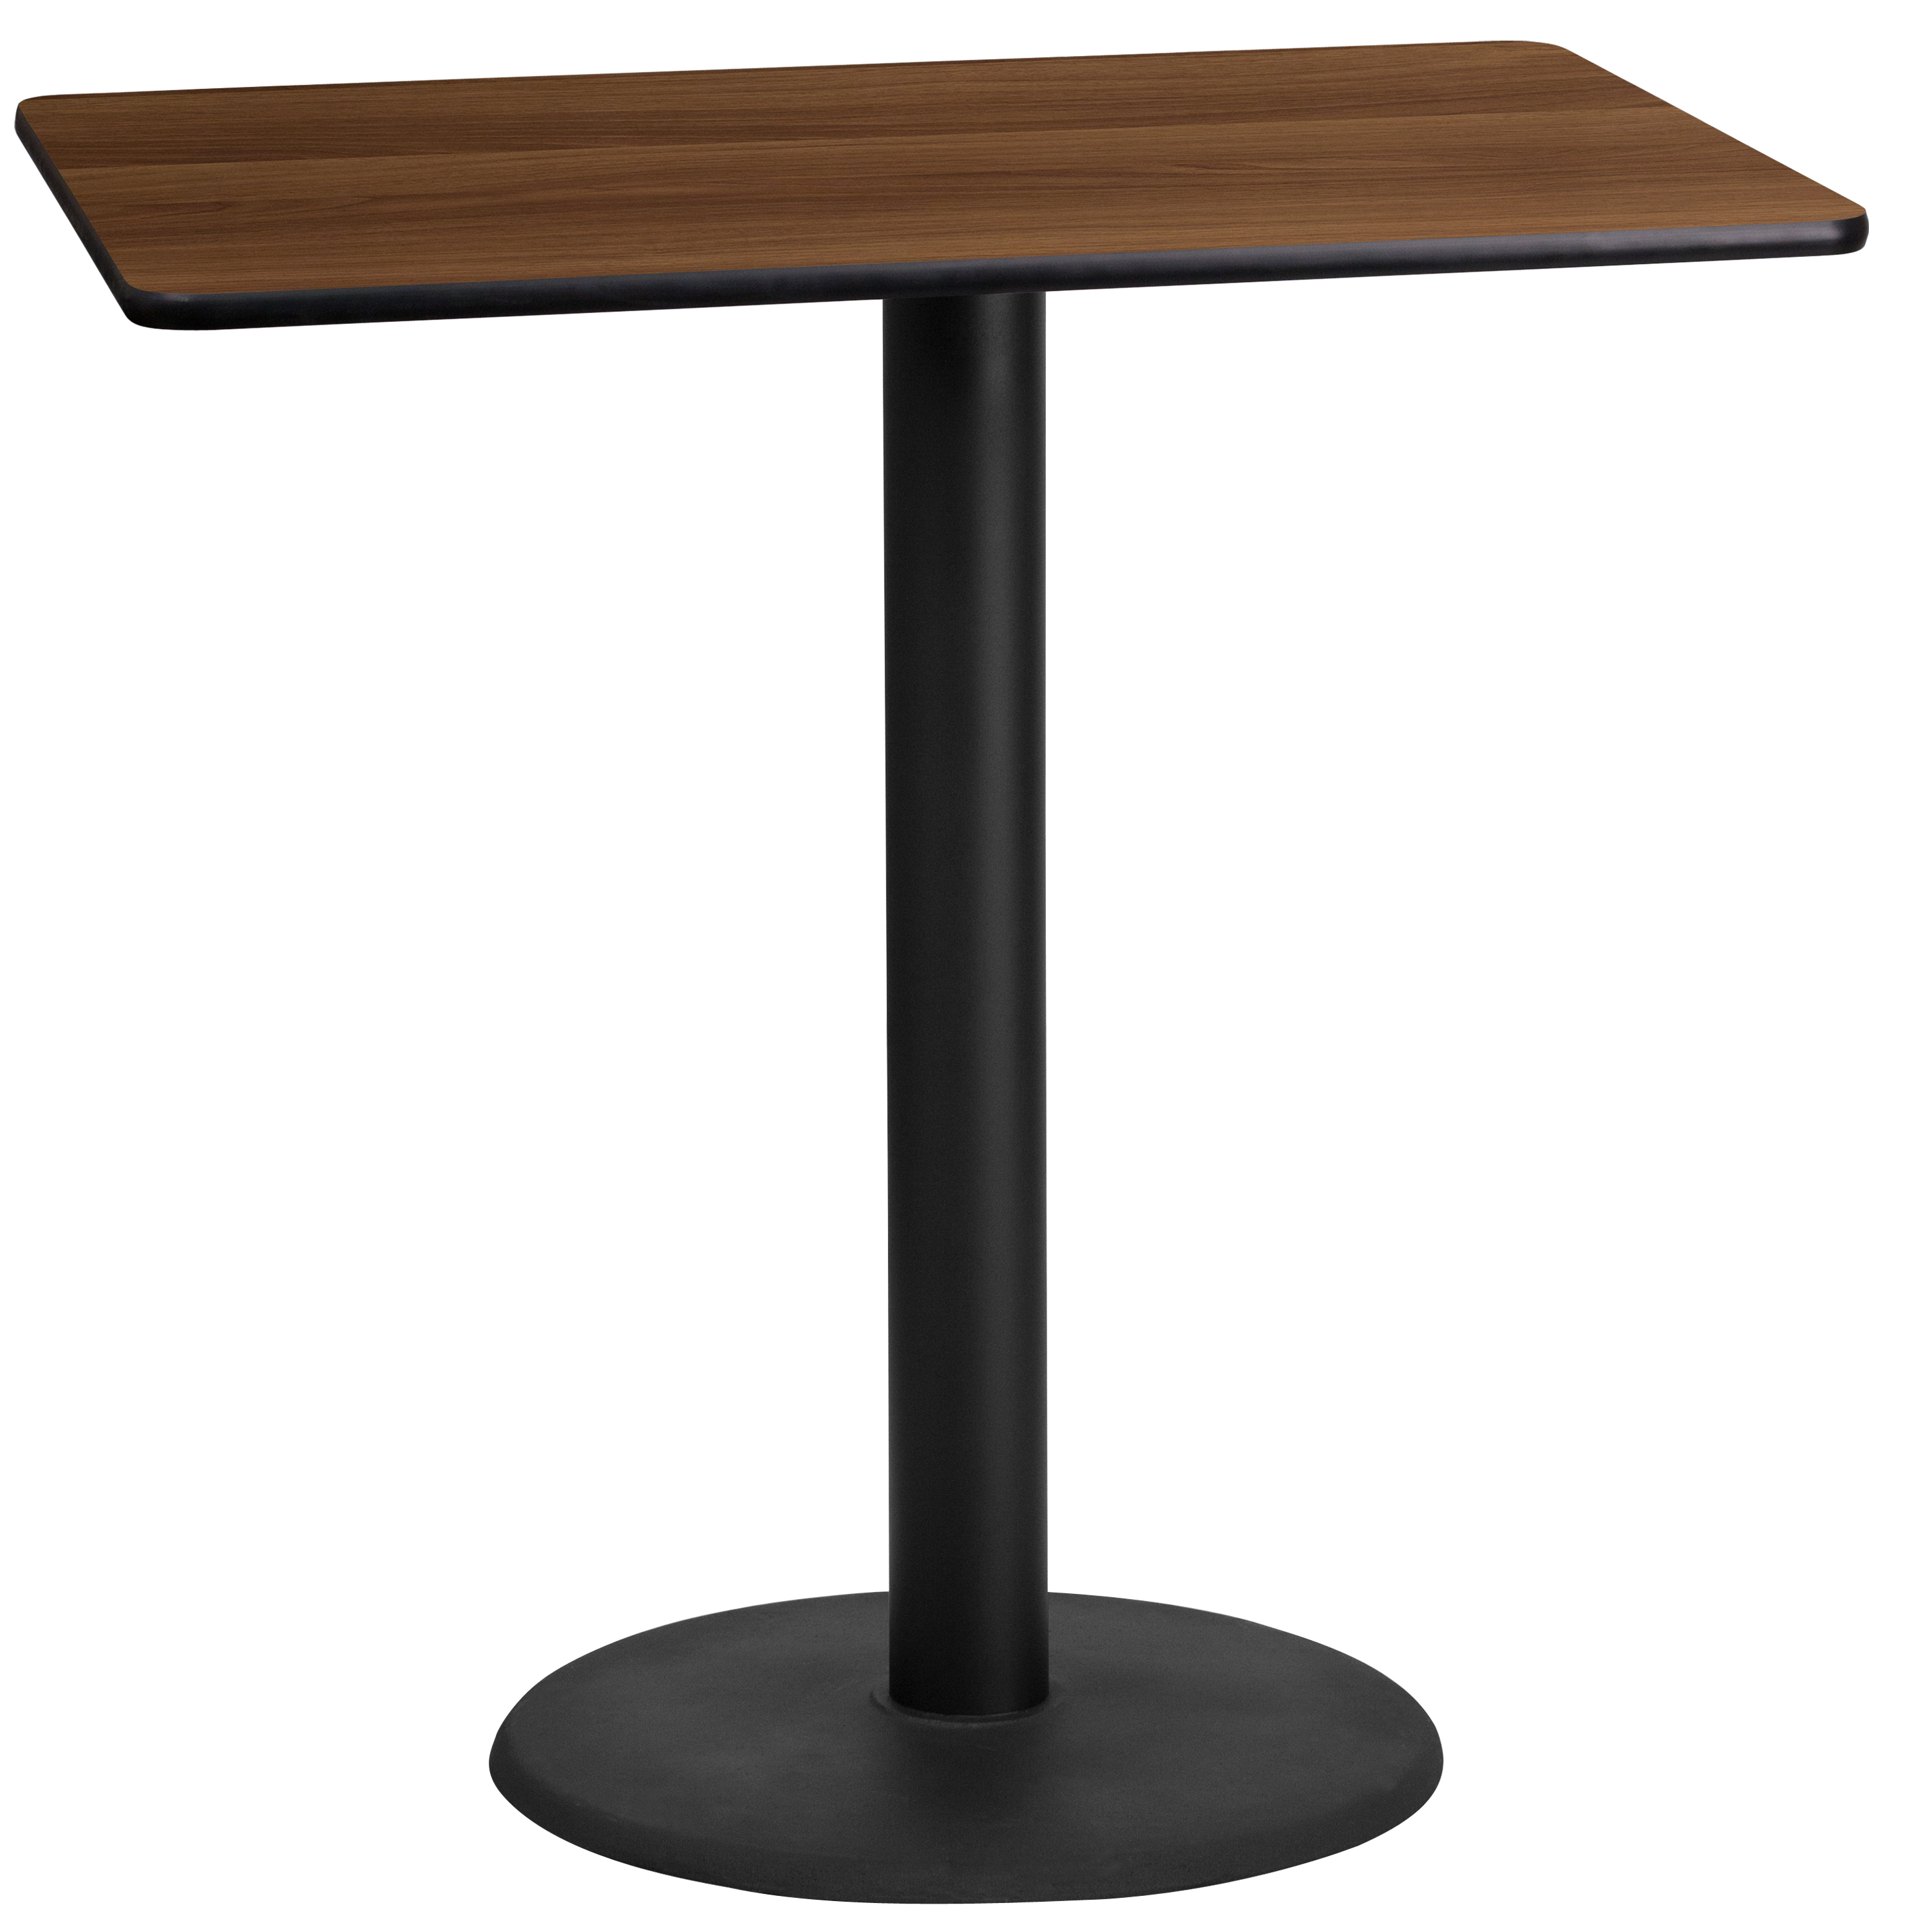 Flash Furniture XU-WALTB-2442-TR24B-GG 24'' x 42'' Rectangular Walnut Laminate Table Top with 24'' Round Bar Height Table Base